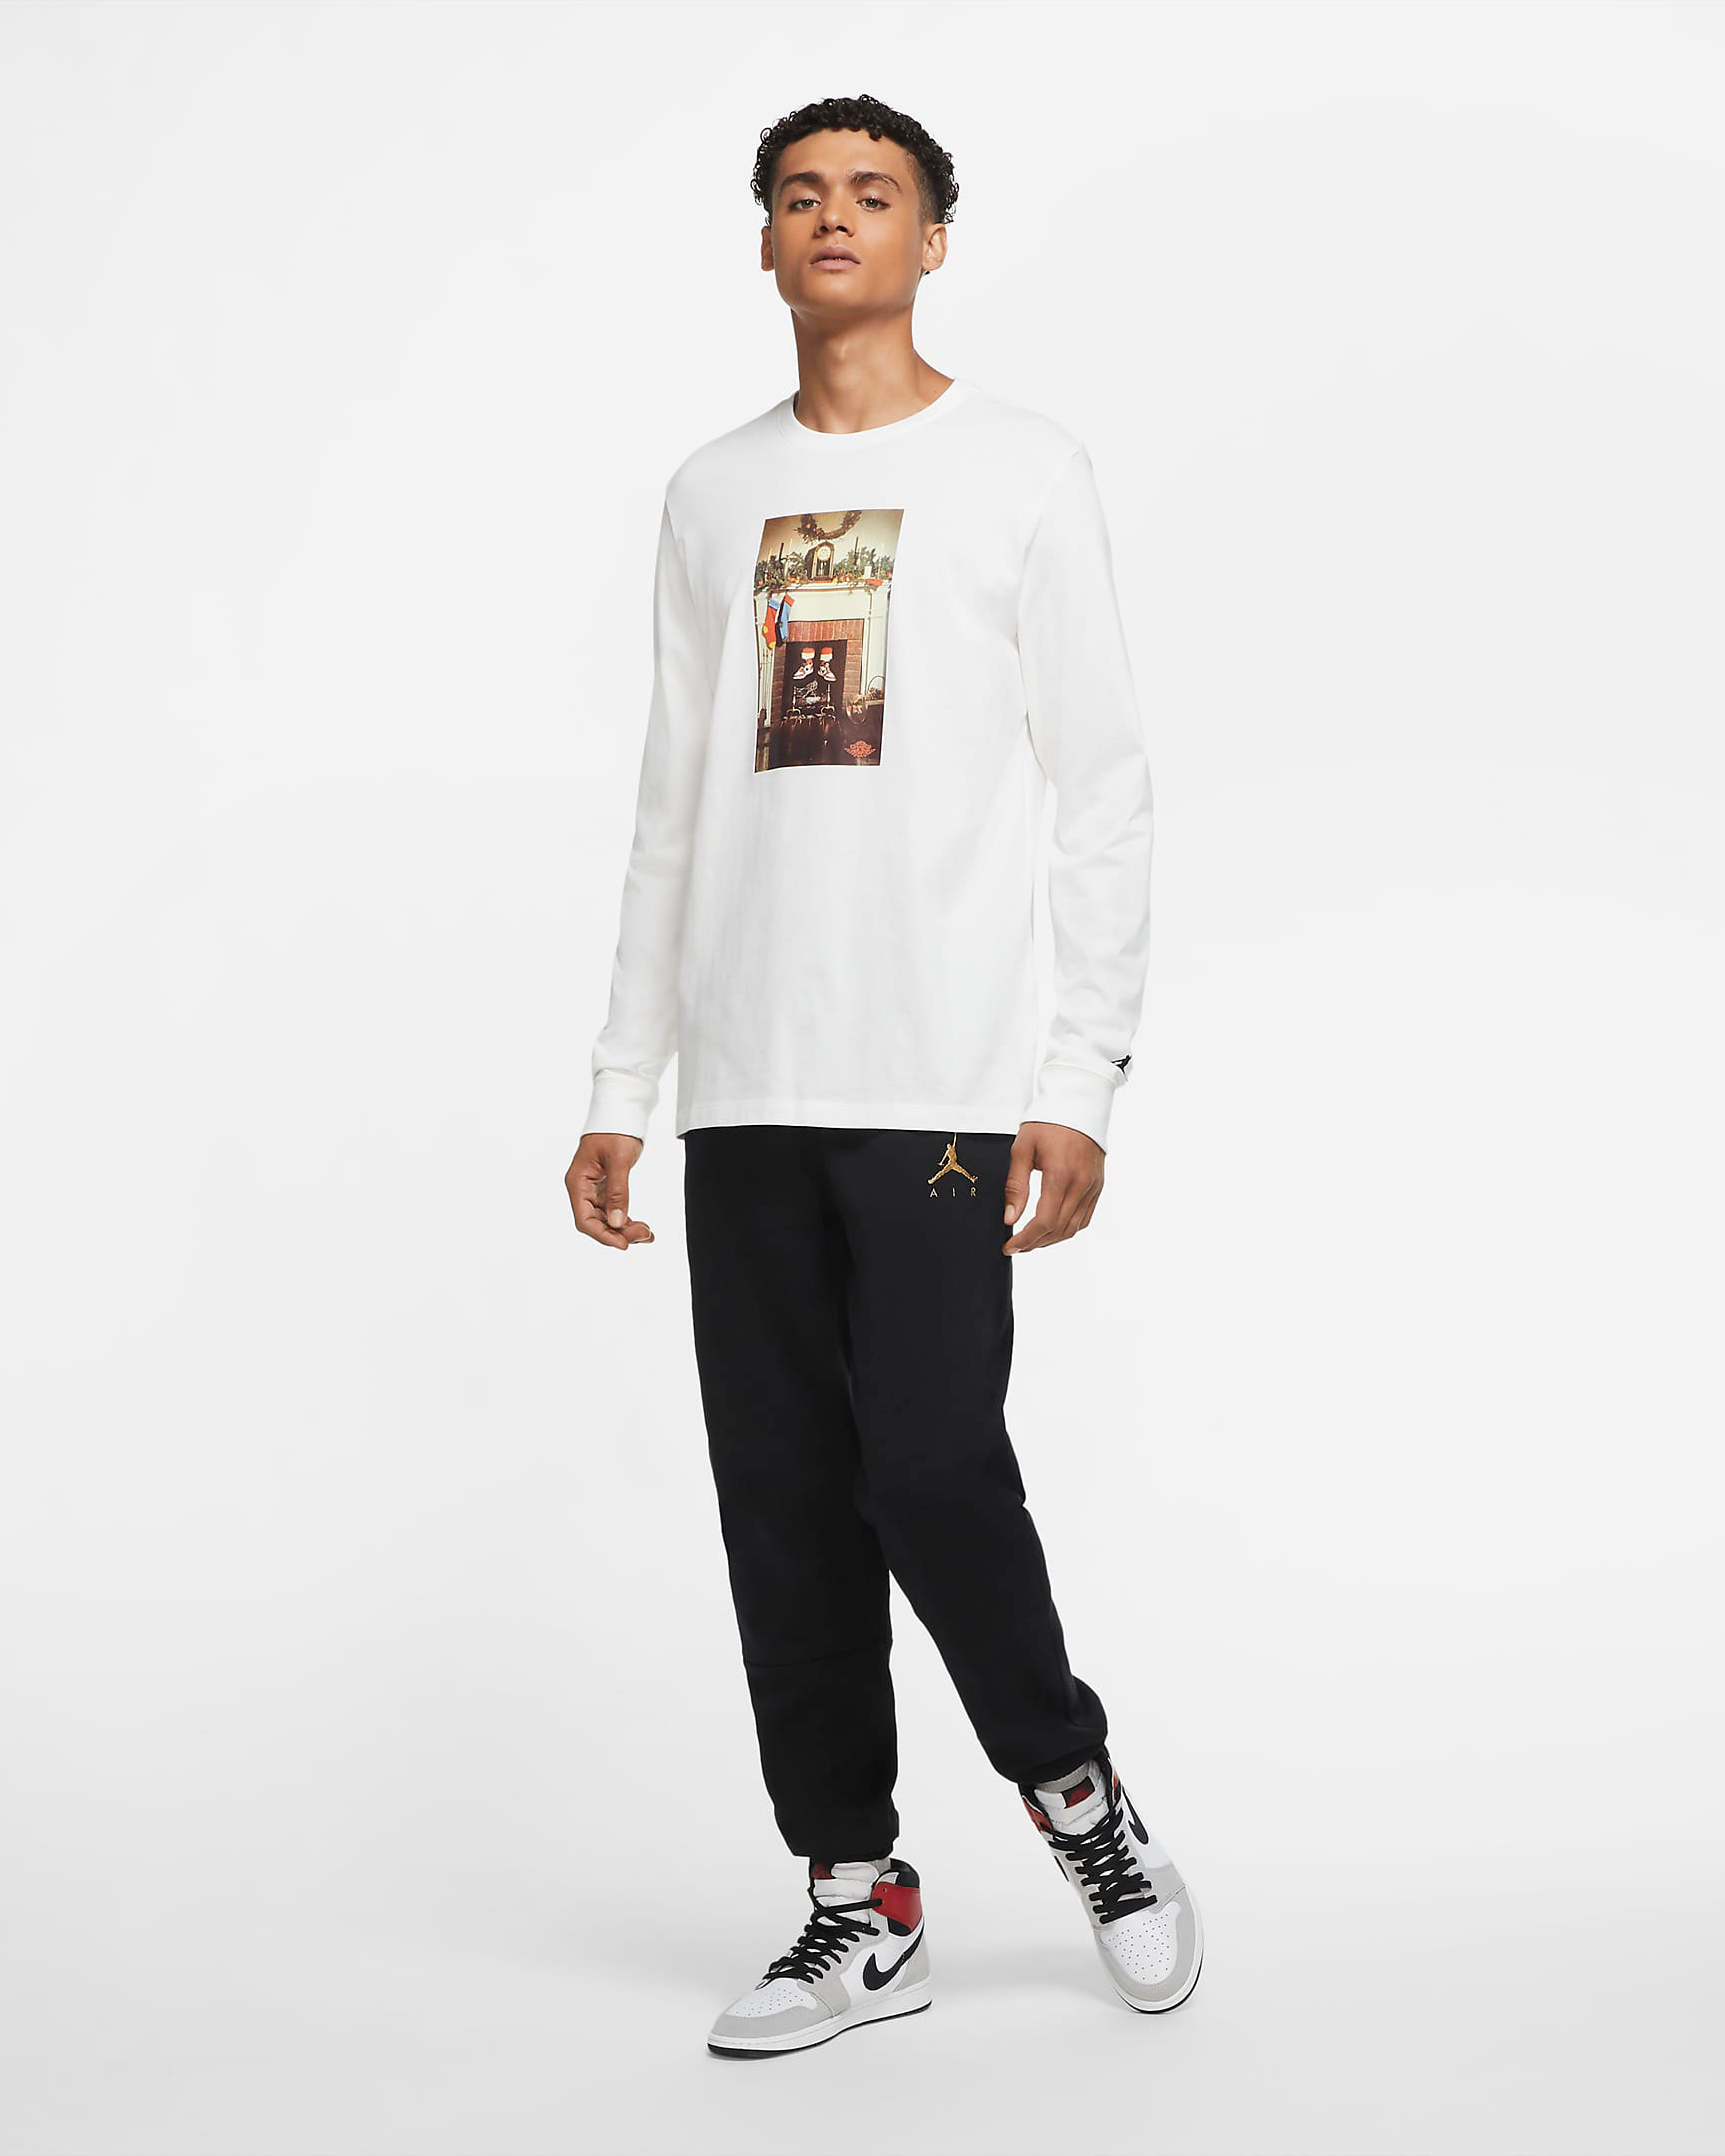 Jordan Santa Chimney Long Sleeve Shirt | SneakerFits.com